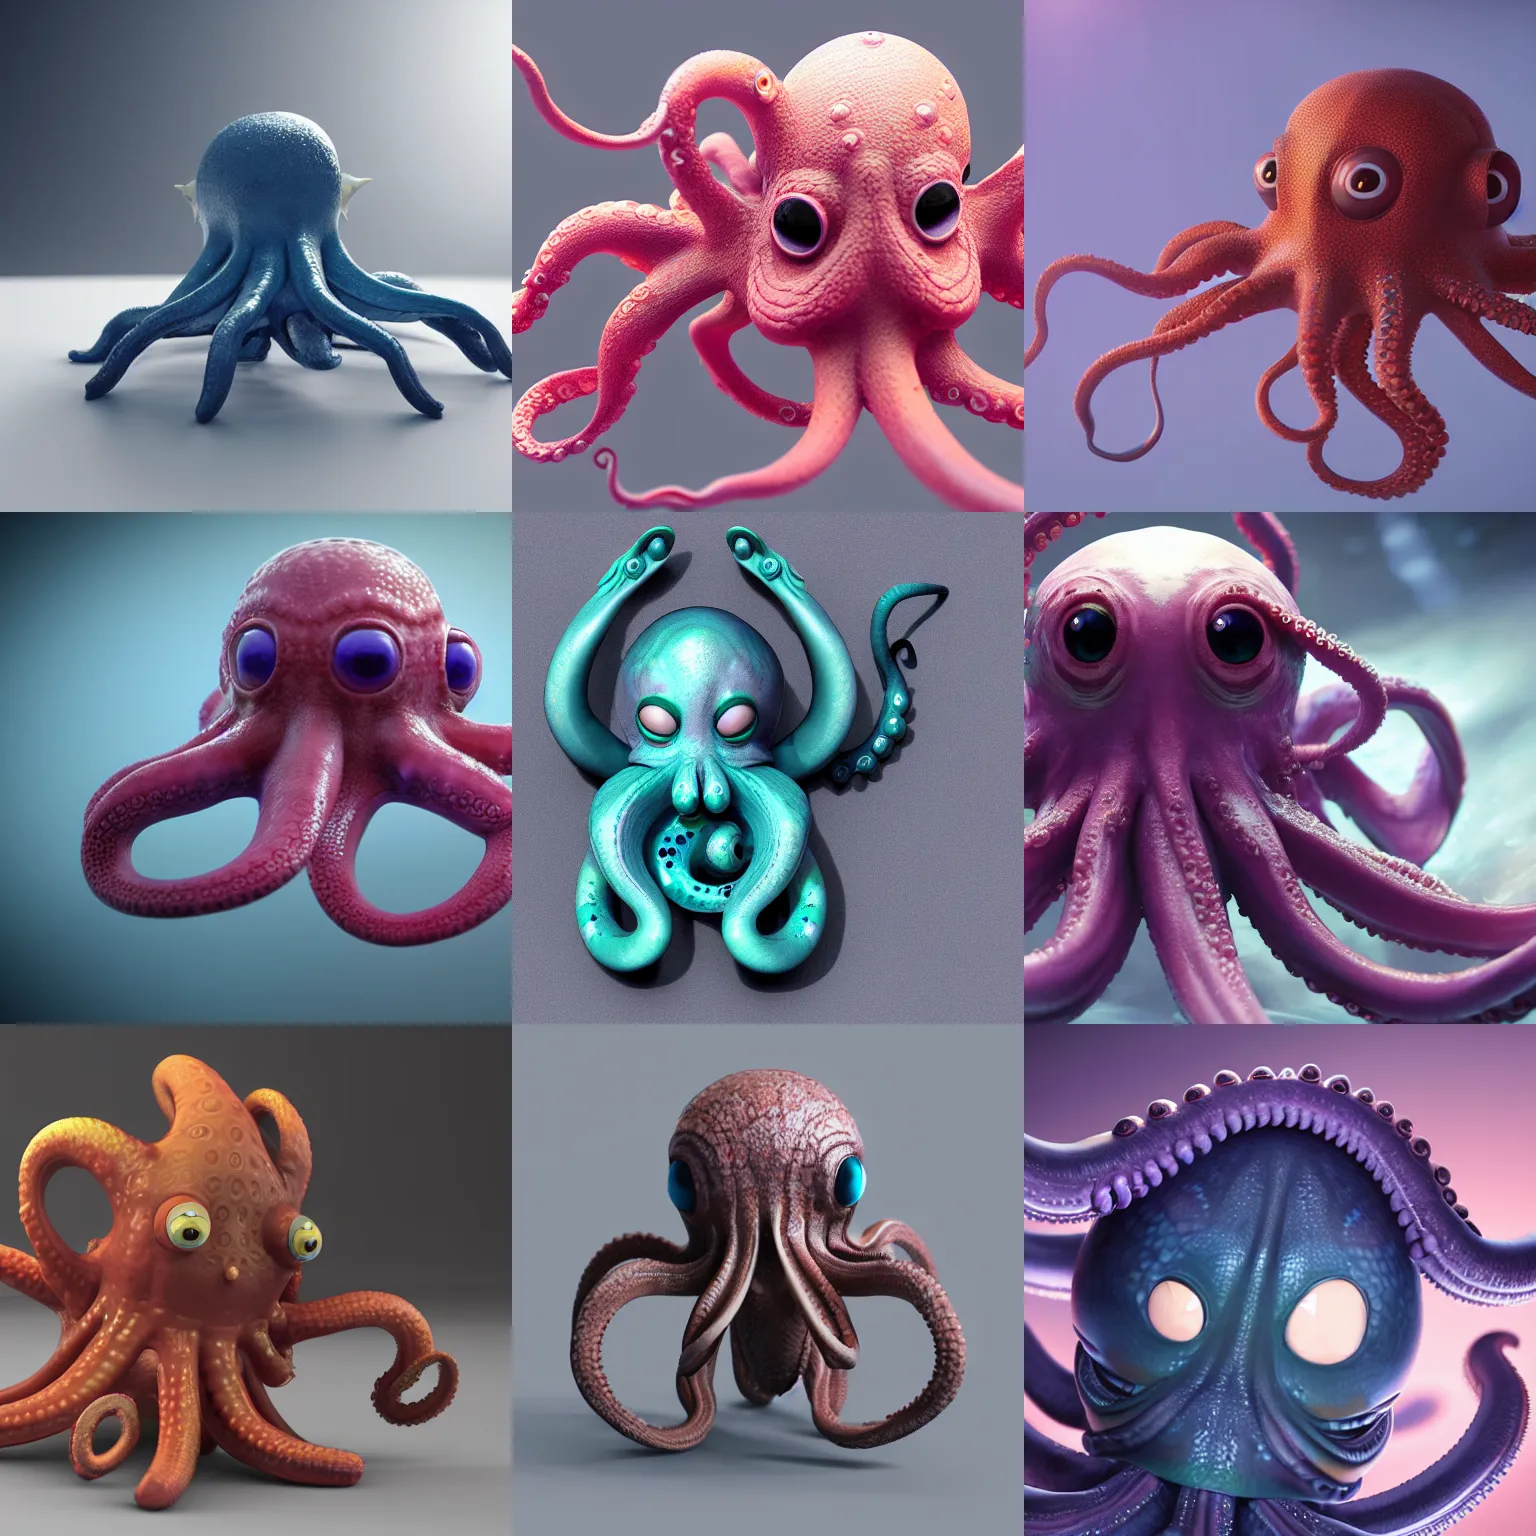 Prompt: a very cute galactic baby alien octopus, octane render, hyper detailed